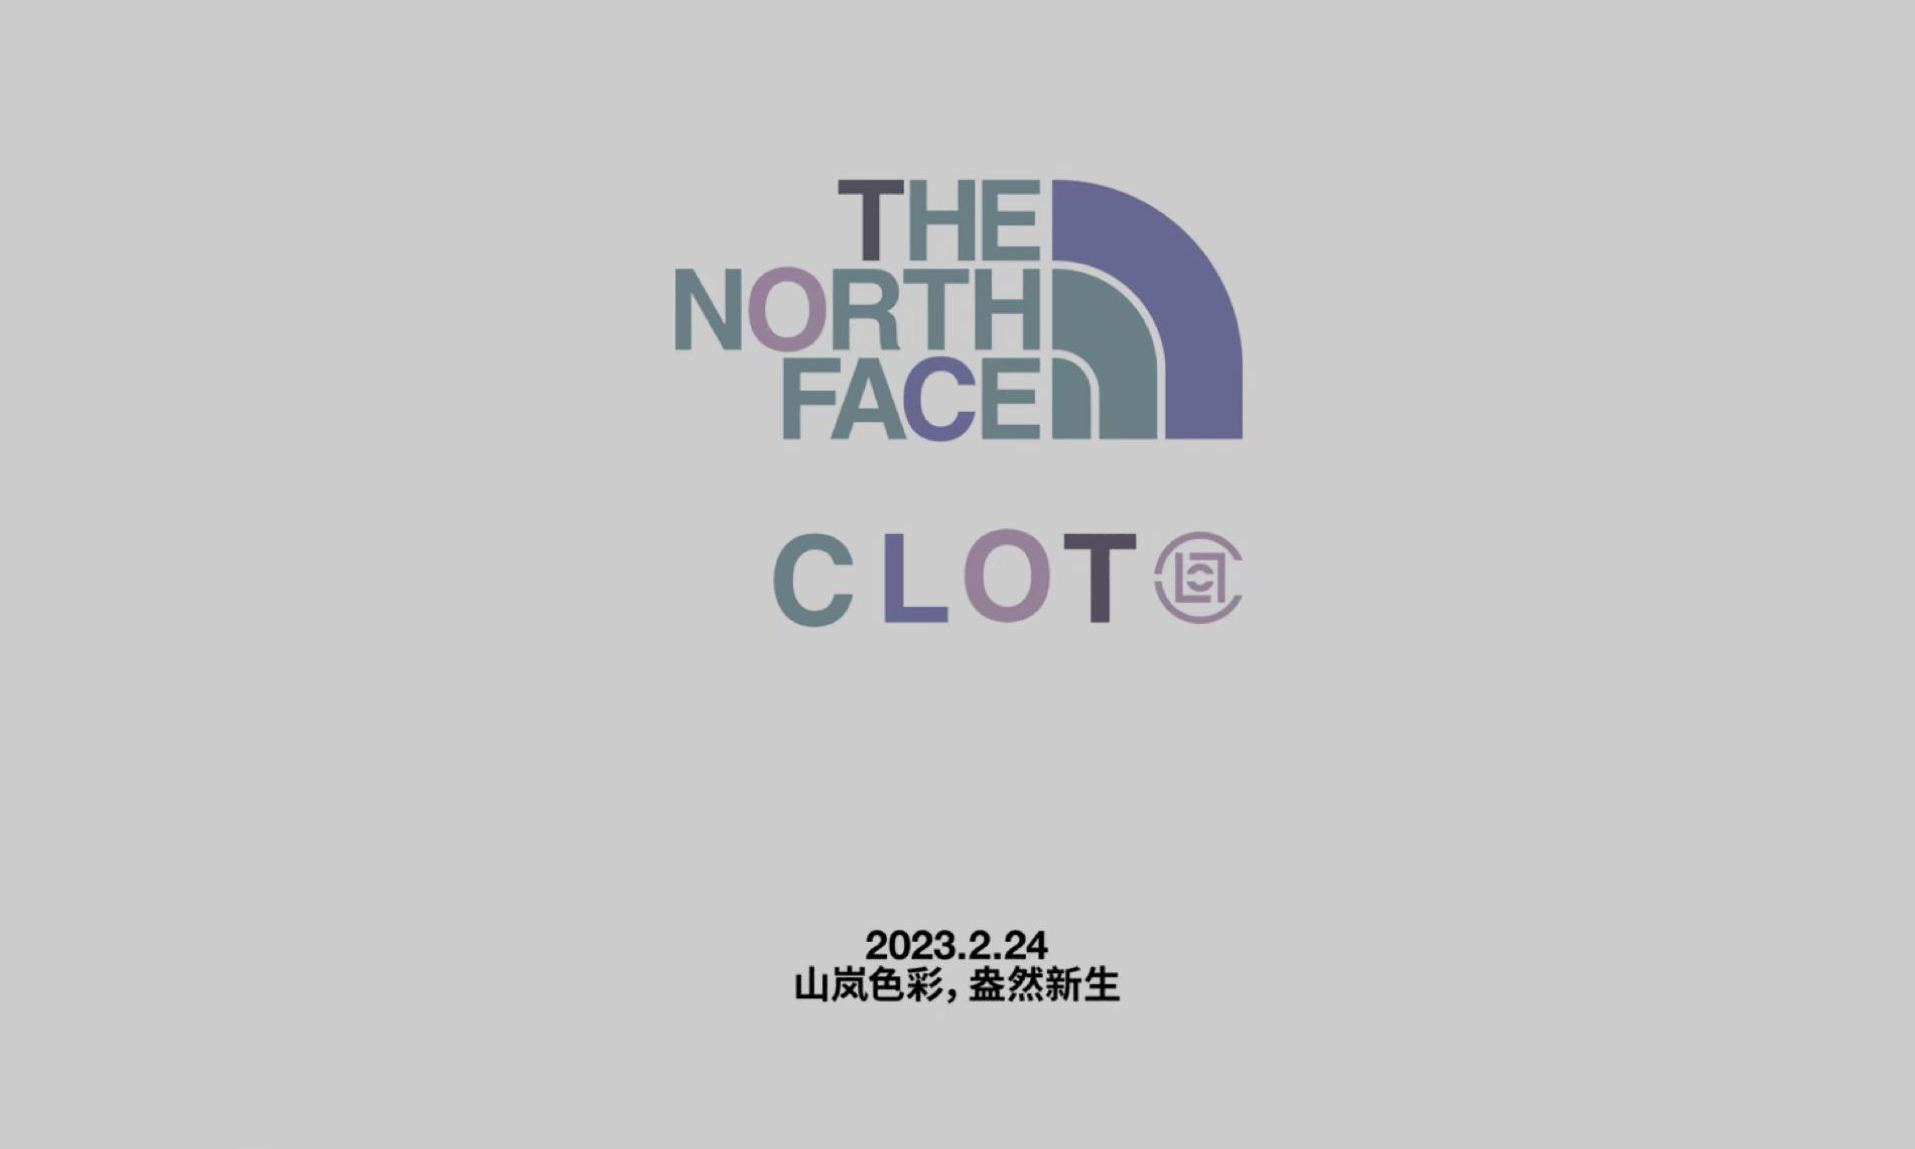 THE NORTH FACE 与 CLOT 首度合作